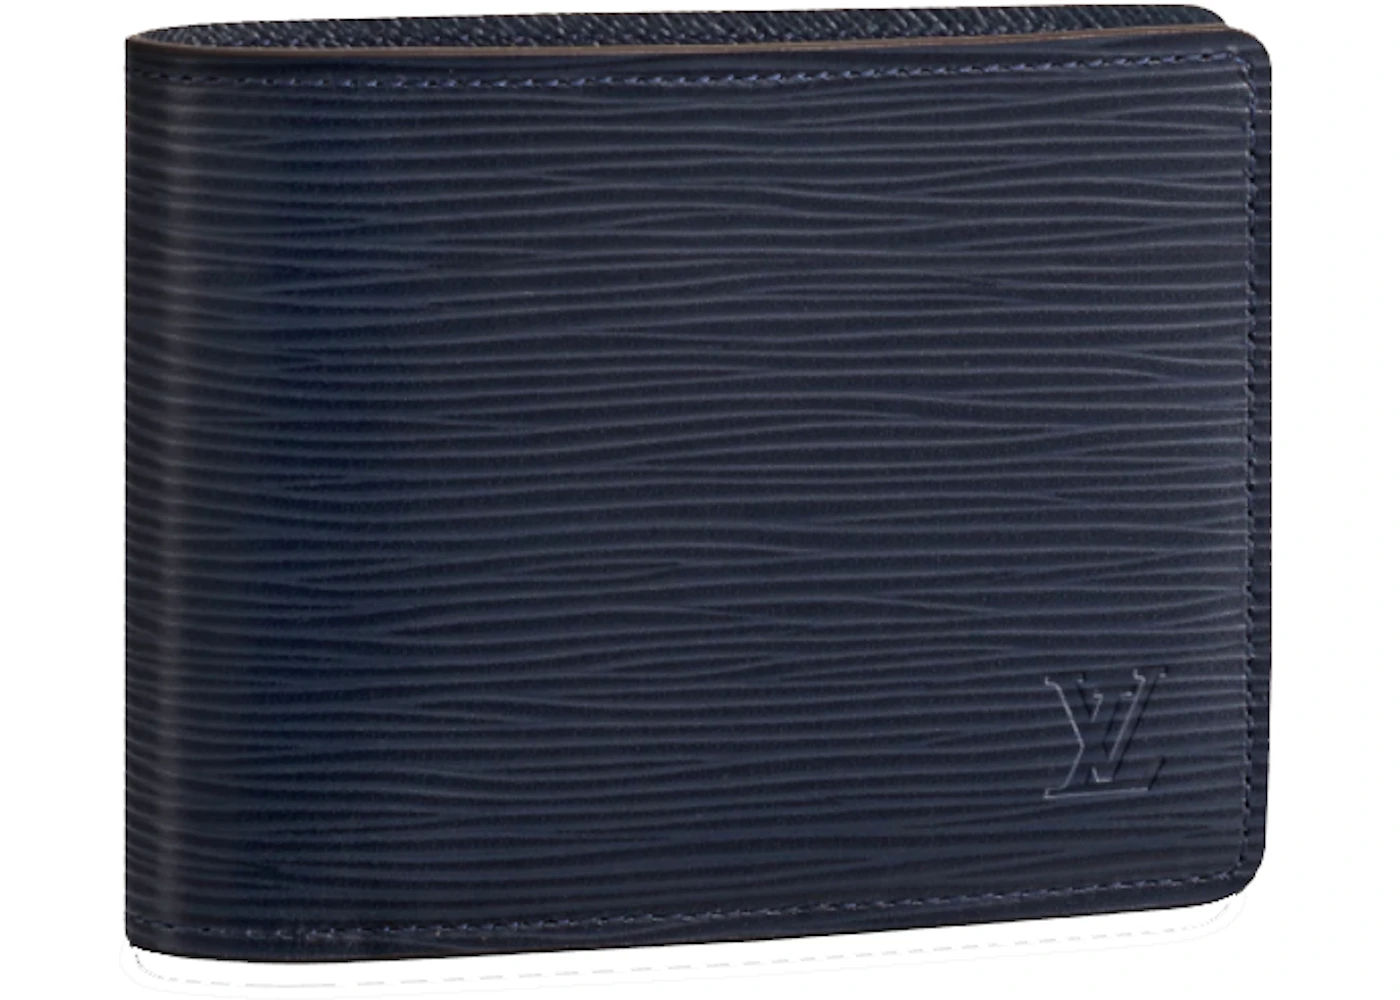 Louis Vuitton Multiple Wallet (3 Card Slot) Epi Navy Blue in Epi